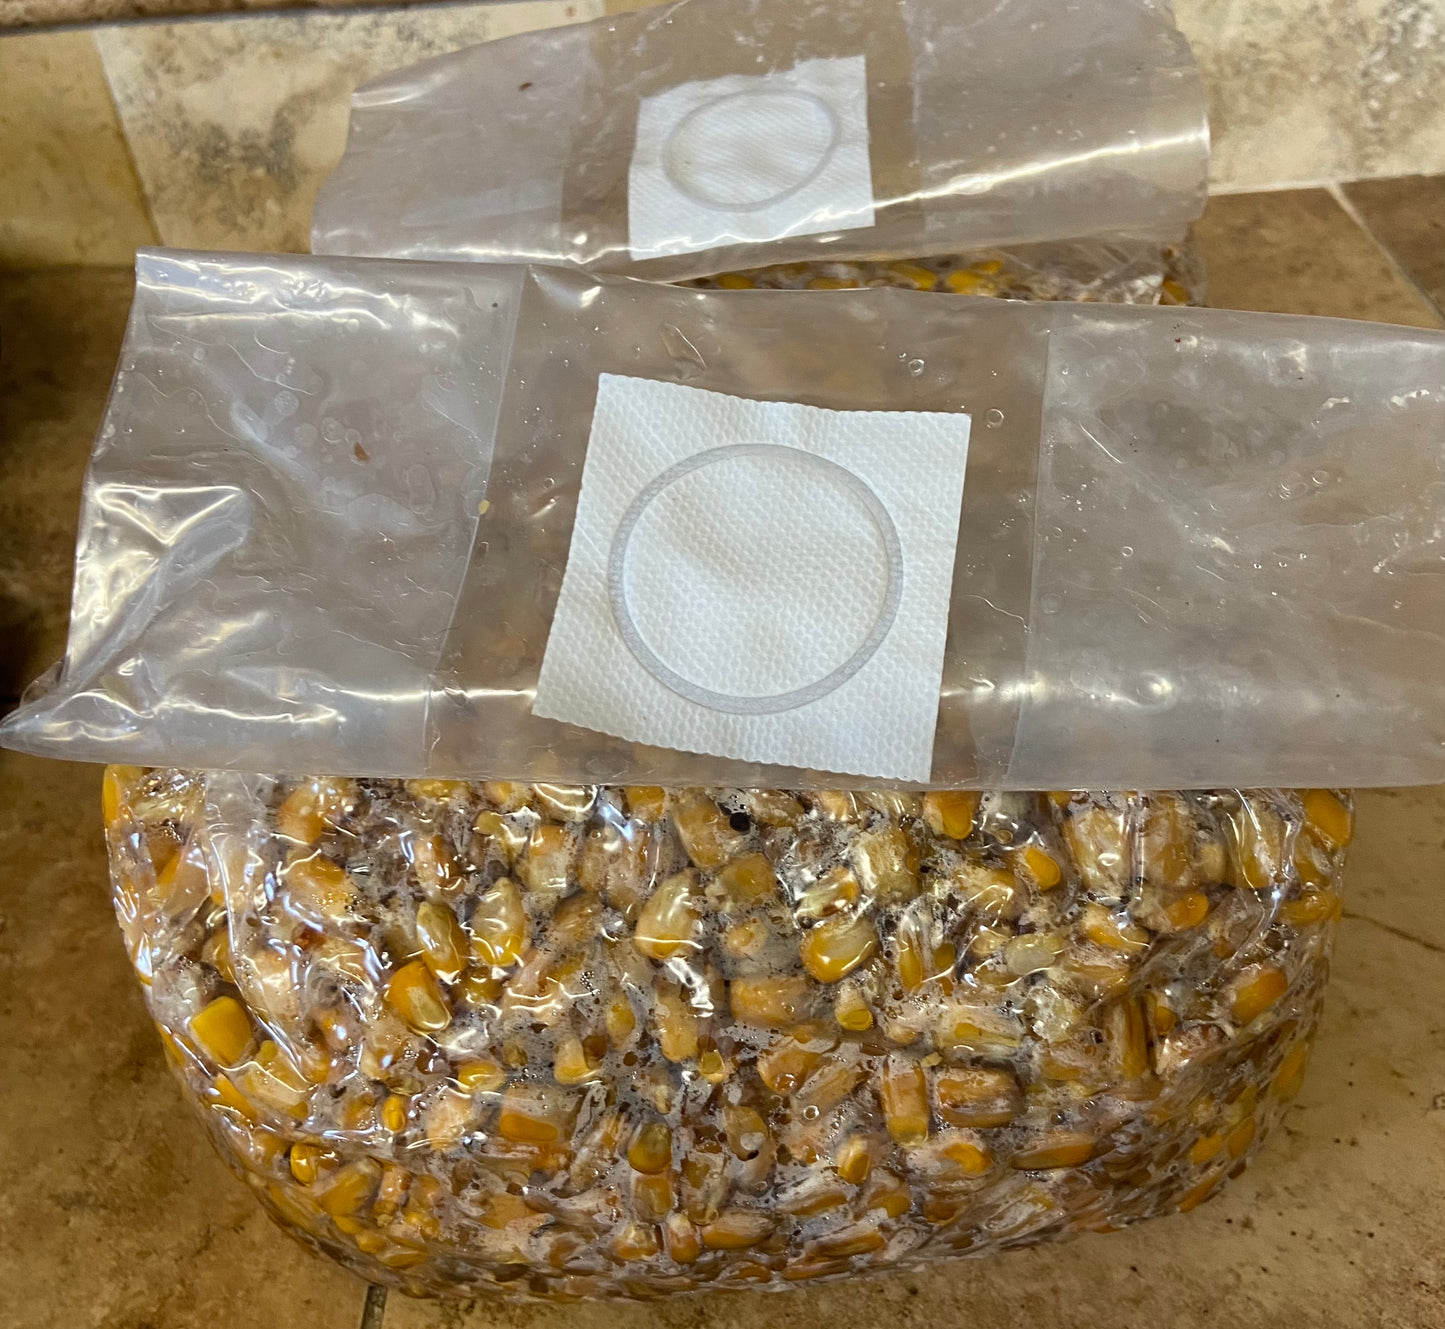 5 Lb Sterilized Grain Bags for Mushroom Growing - Pack of 2